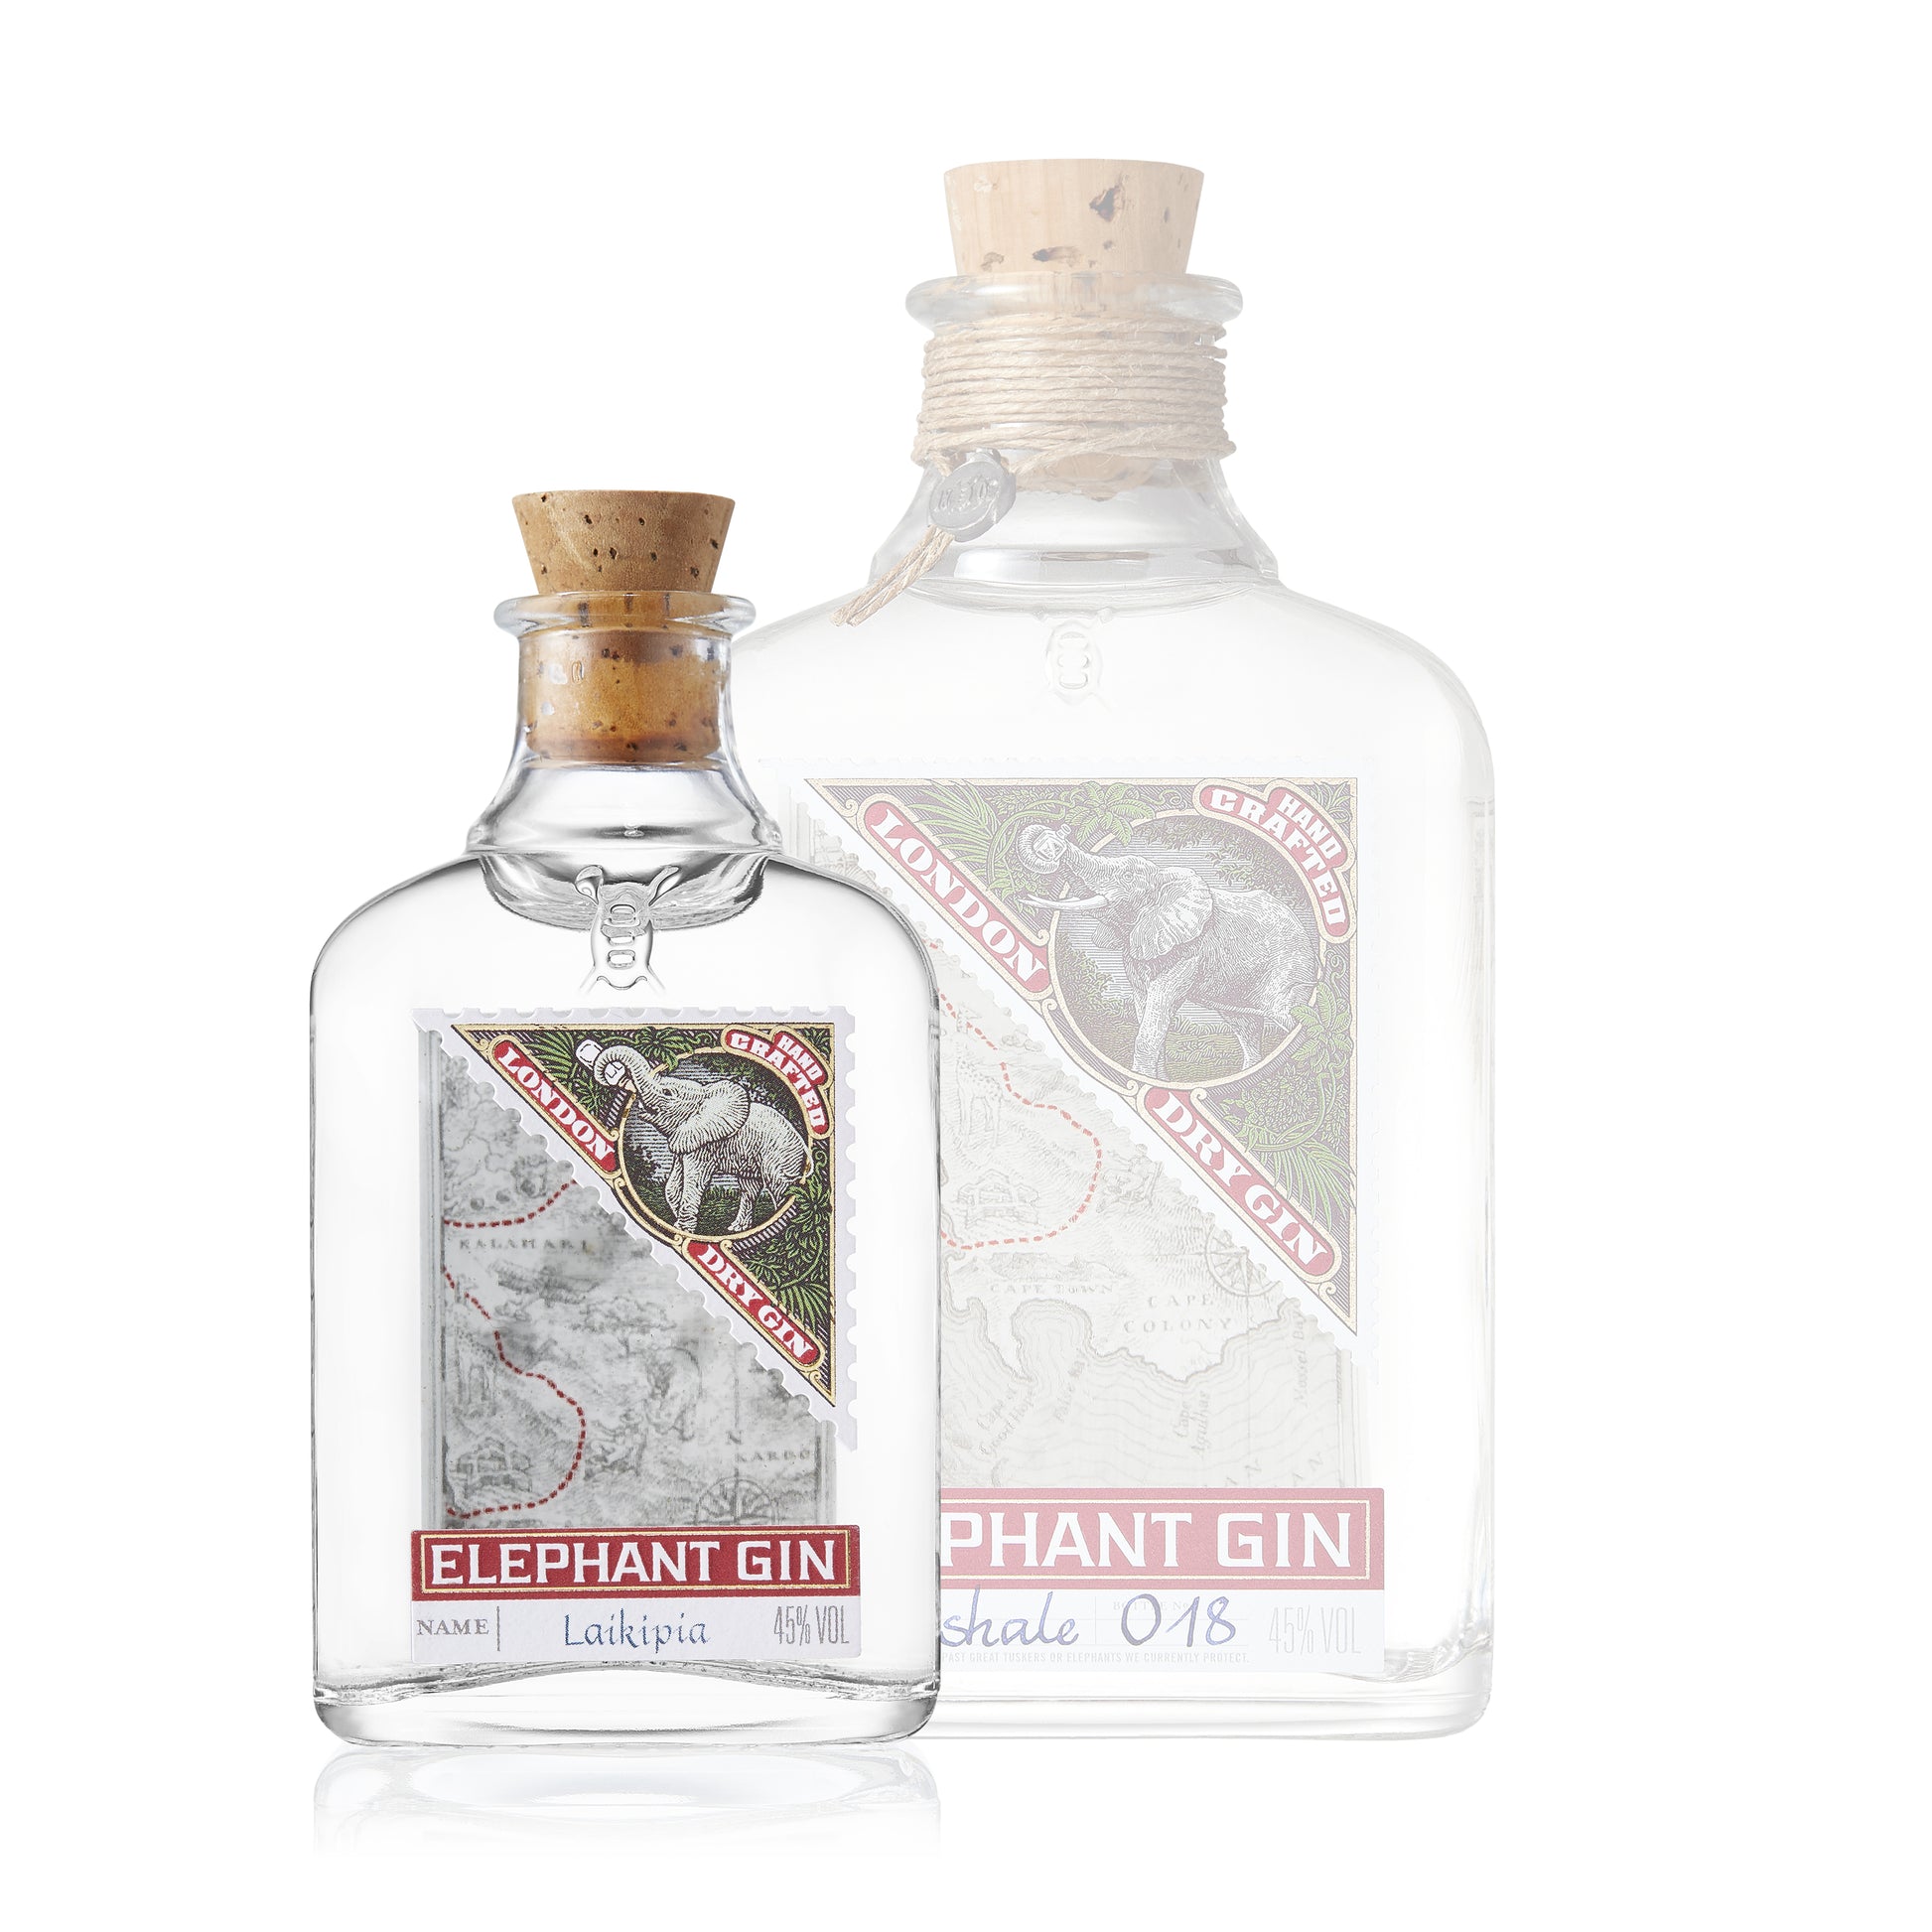 Elephant London Dry Gin 50 ml – Elephant Gin